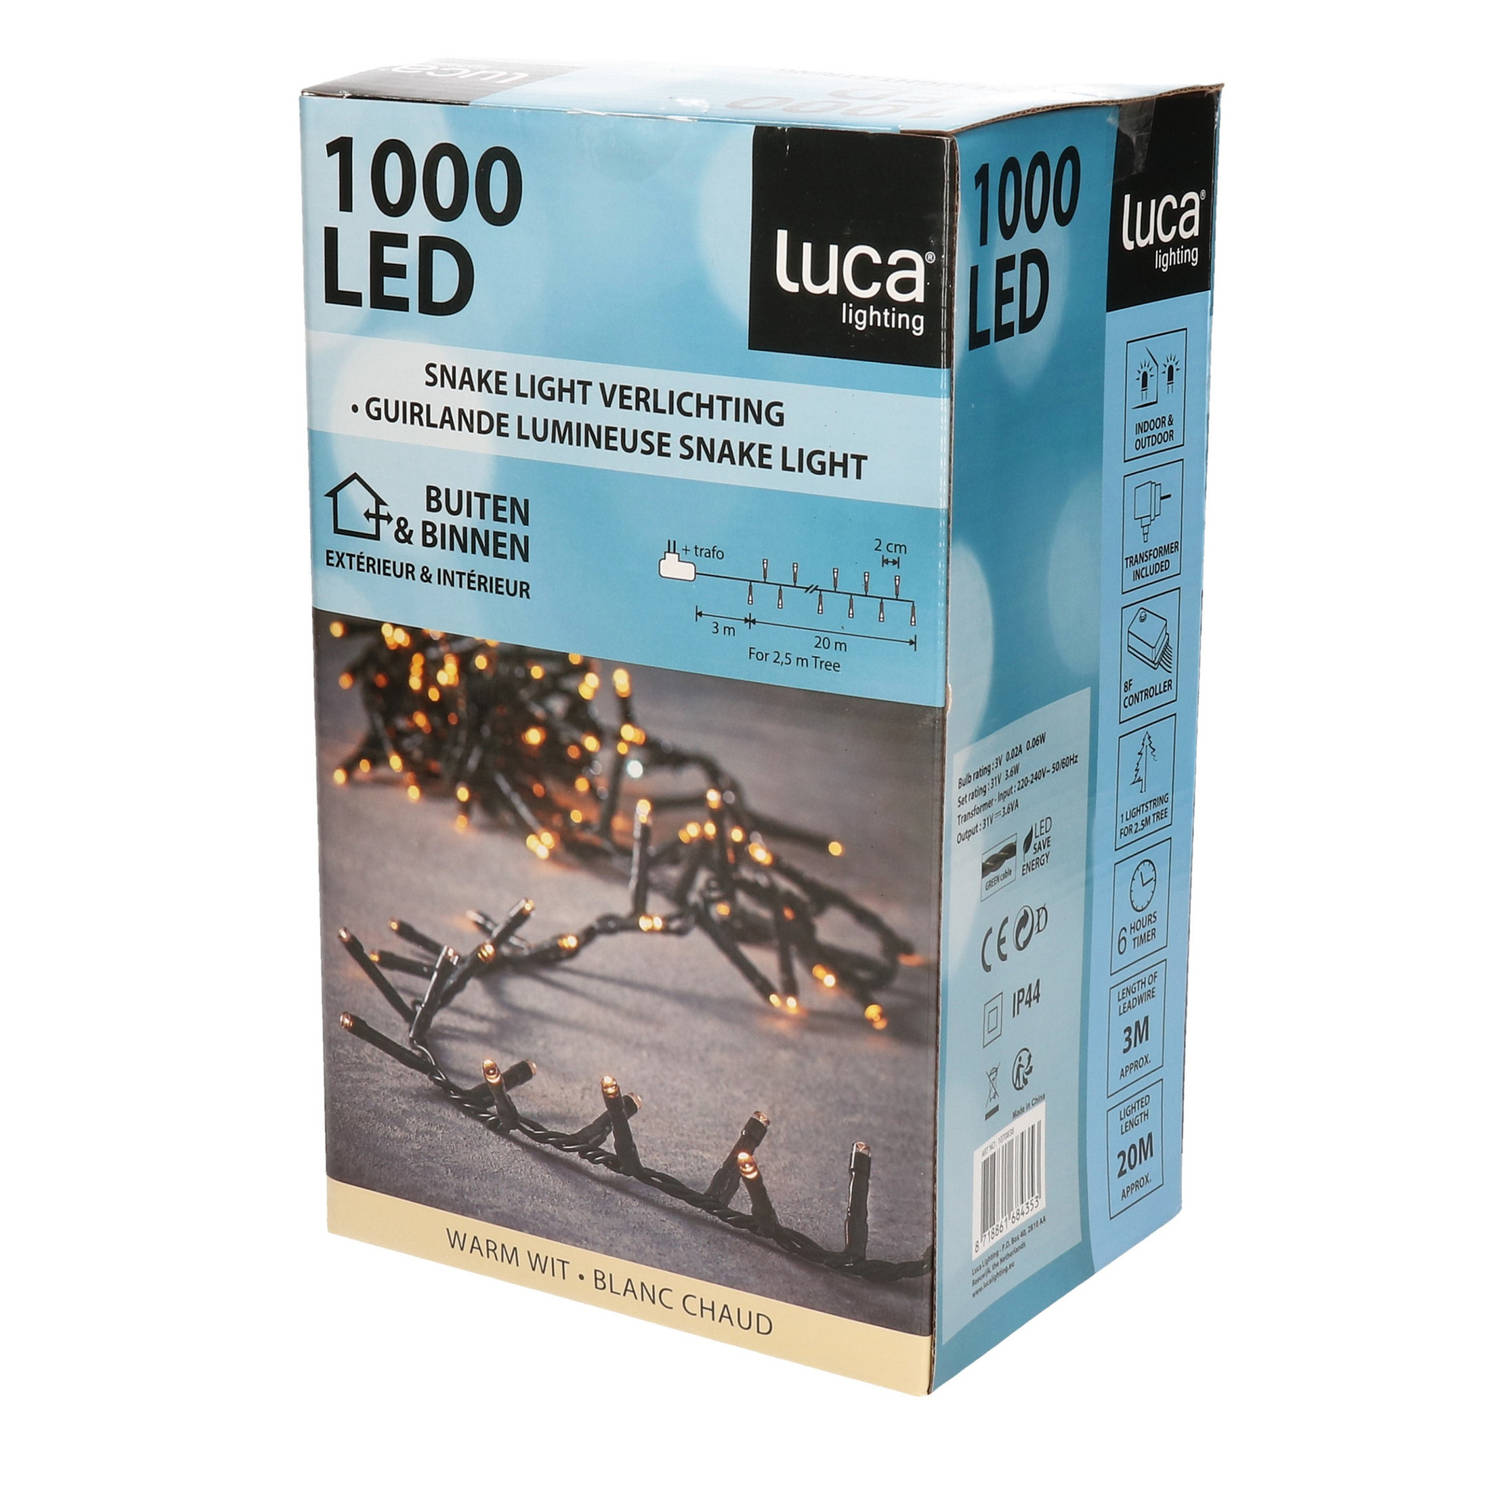 Luca Lighting LED Kerstverlichting Binnen 2000cm 1000 Leds 2300K | Warm Wit Incl. Controller en Time